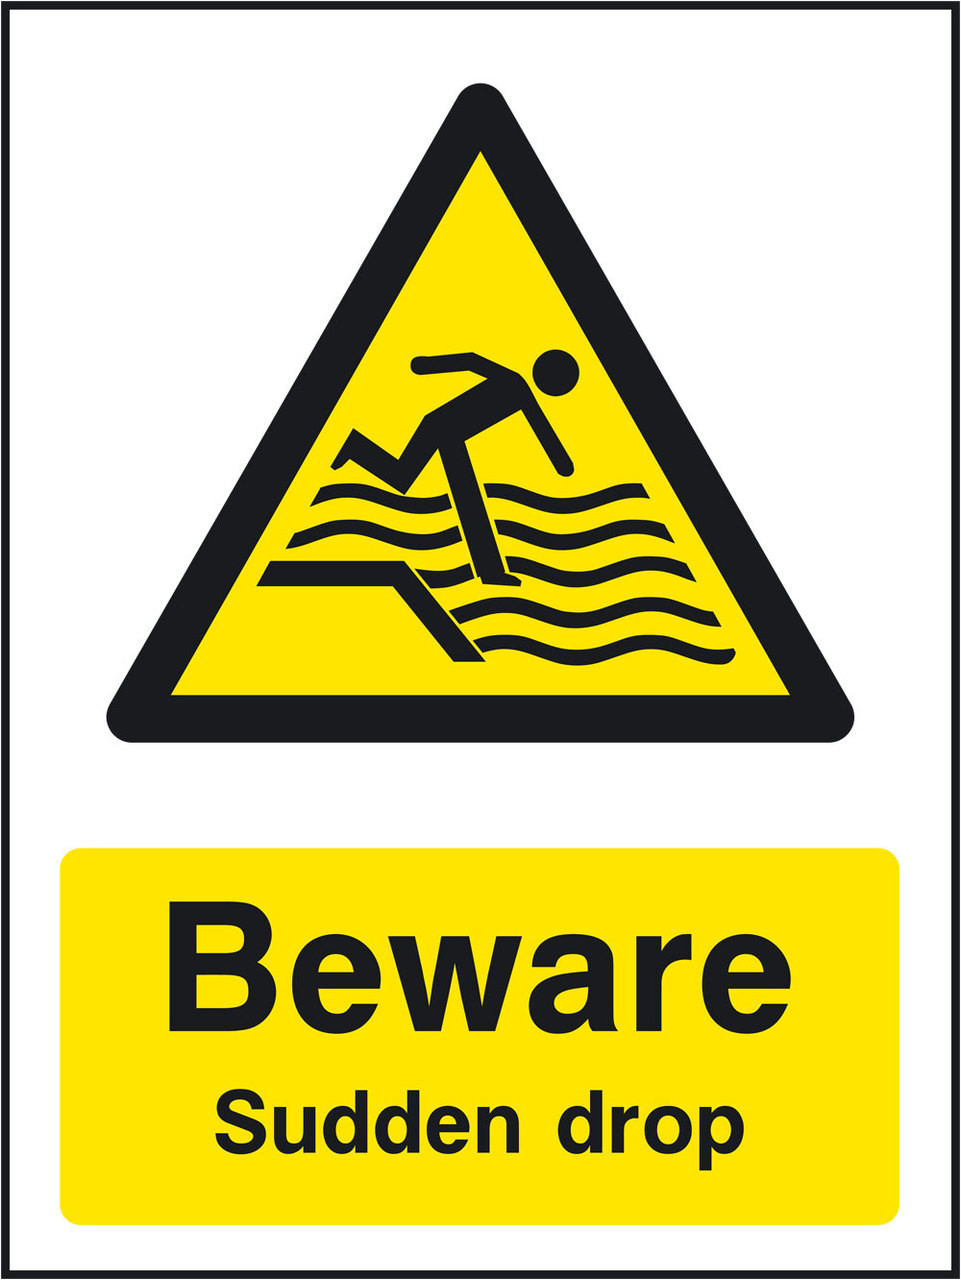 Beware Sudden drop